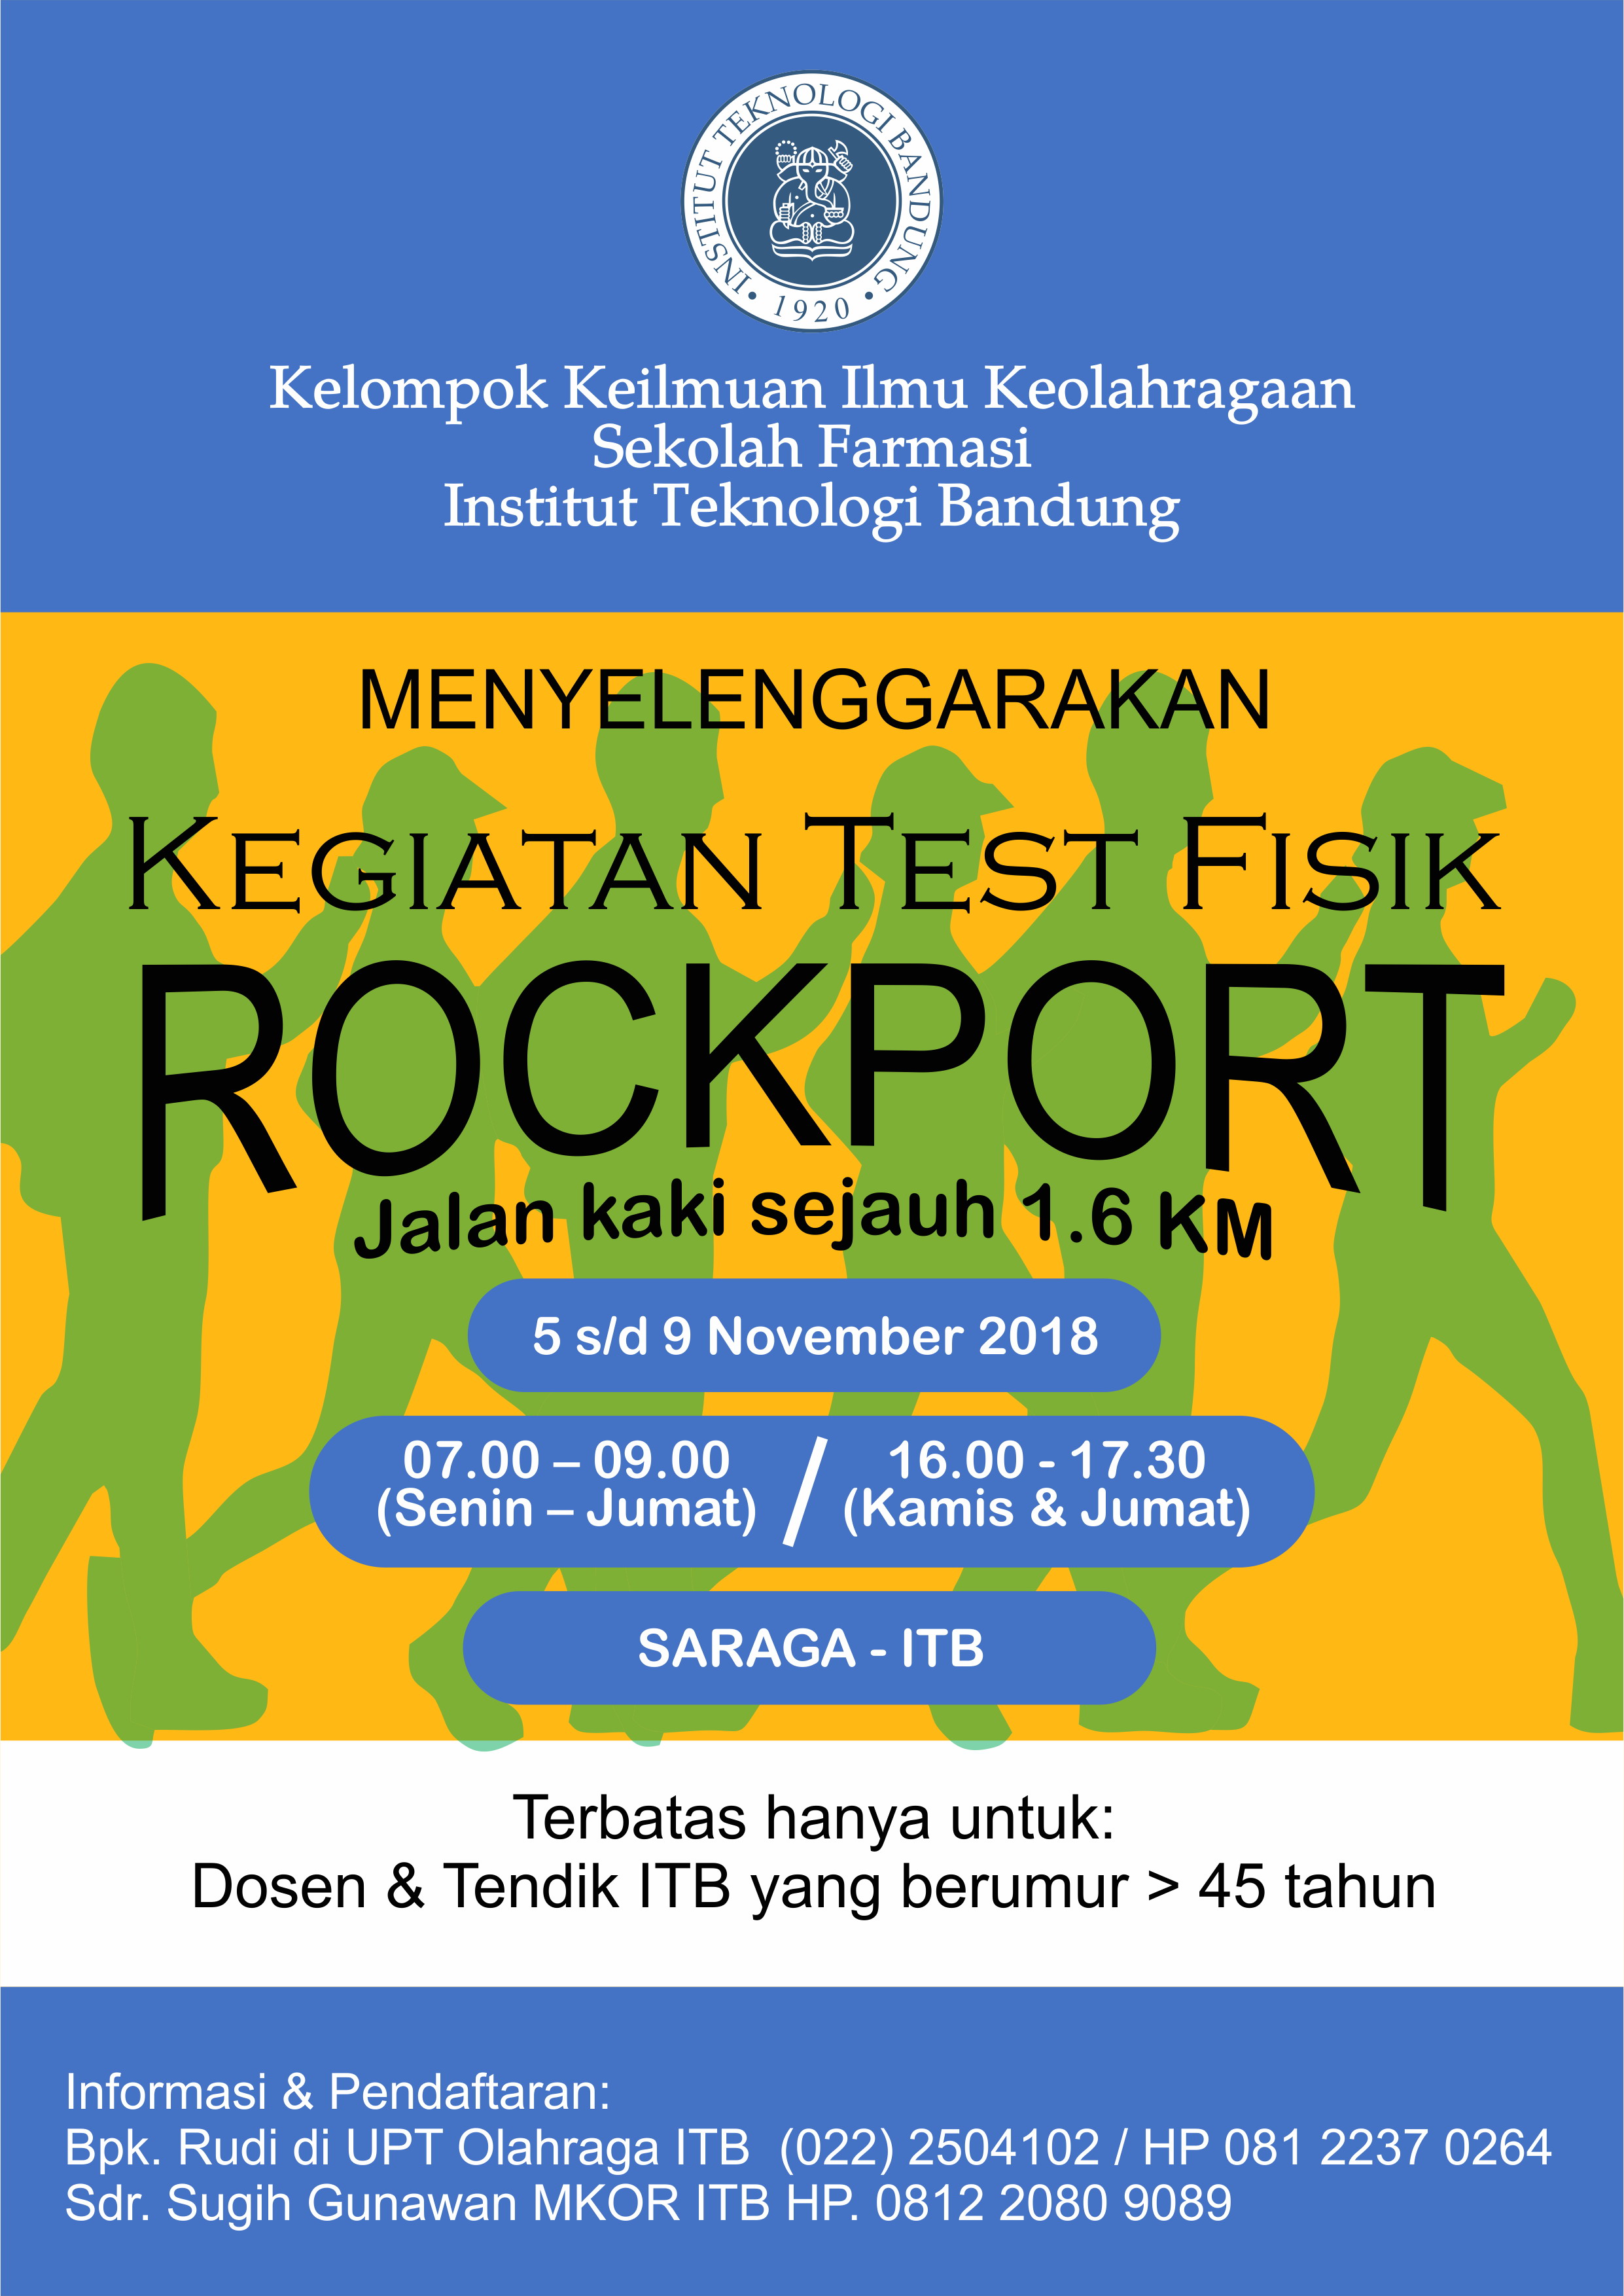 Kegiatan Test Rockport 5 9 November 2018 Sekolah Farmasi